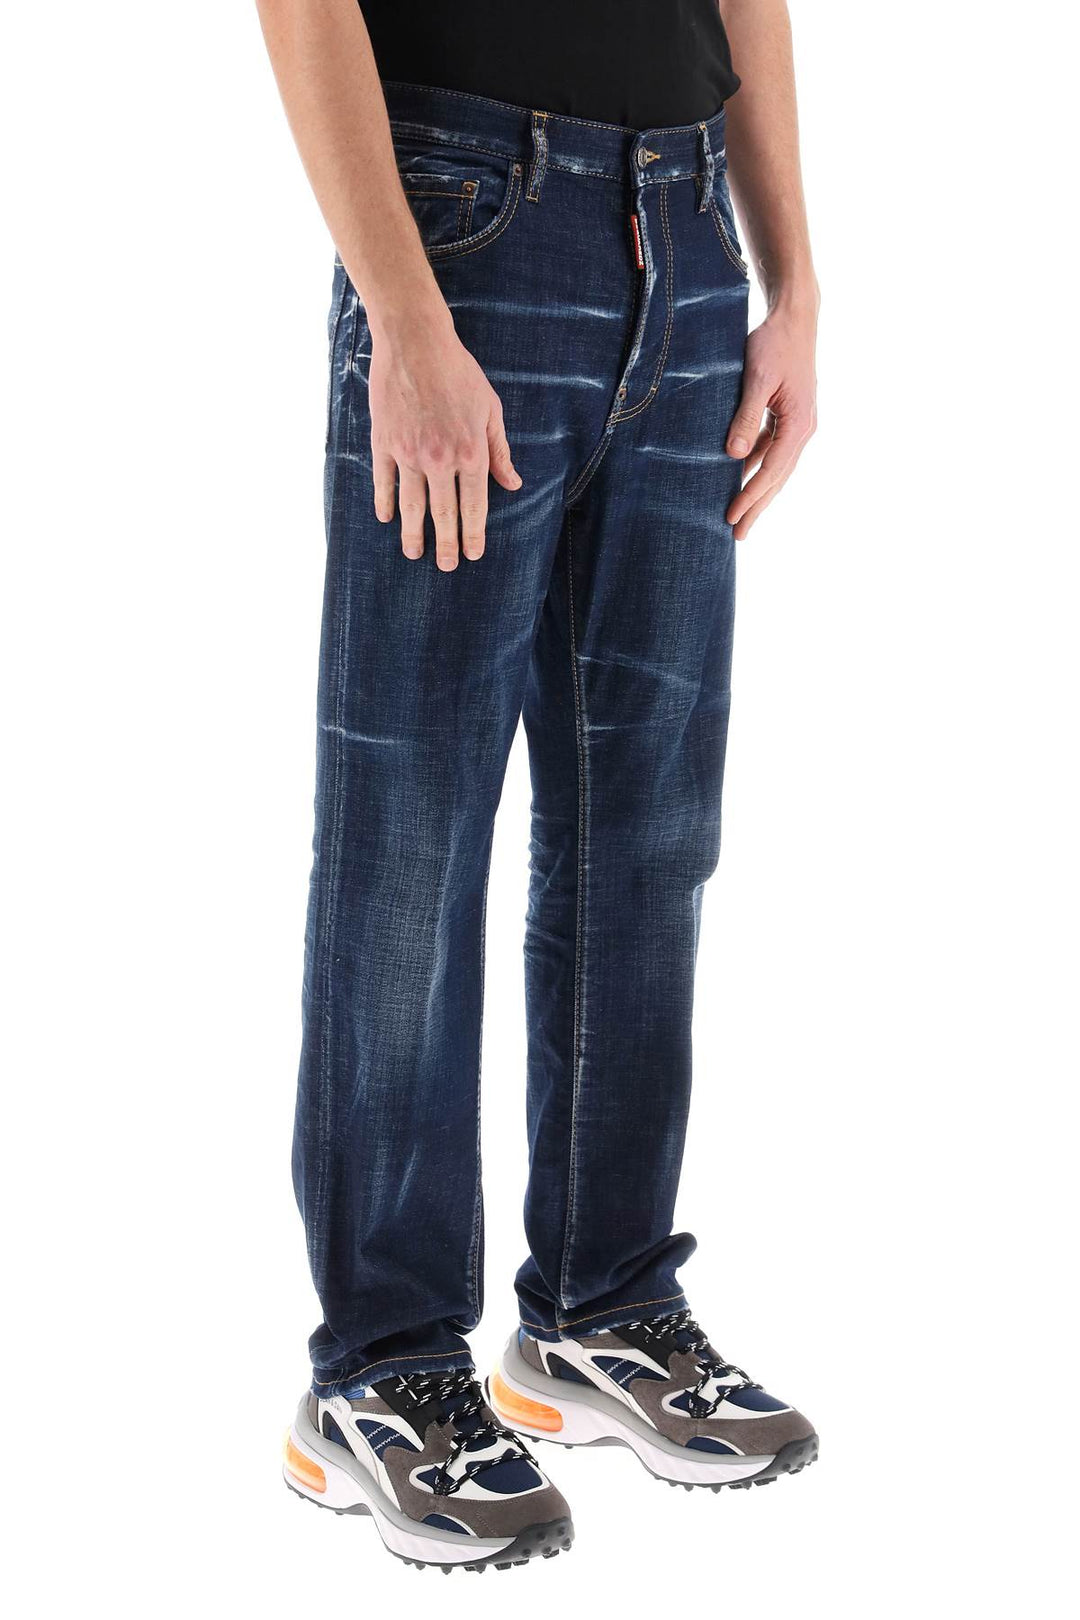 Jeans 642 In Dark Clean Wash - Dsquared2 - Uomo